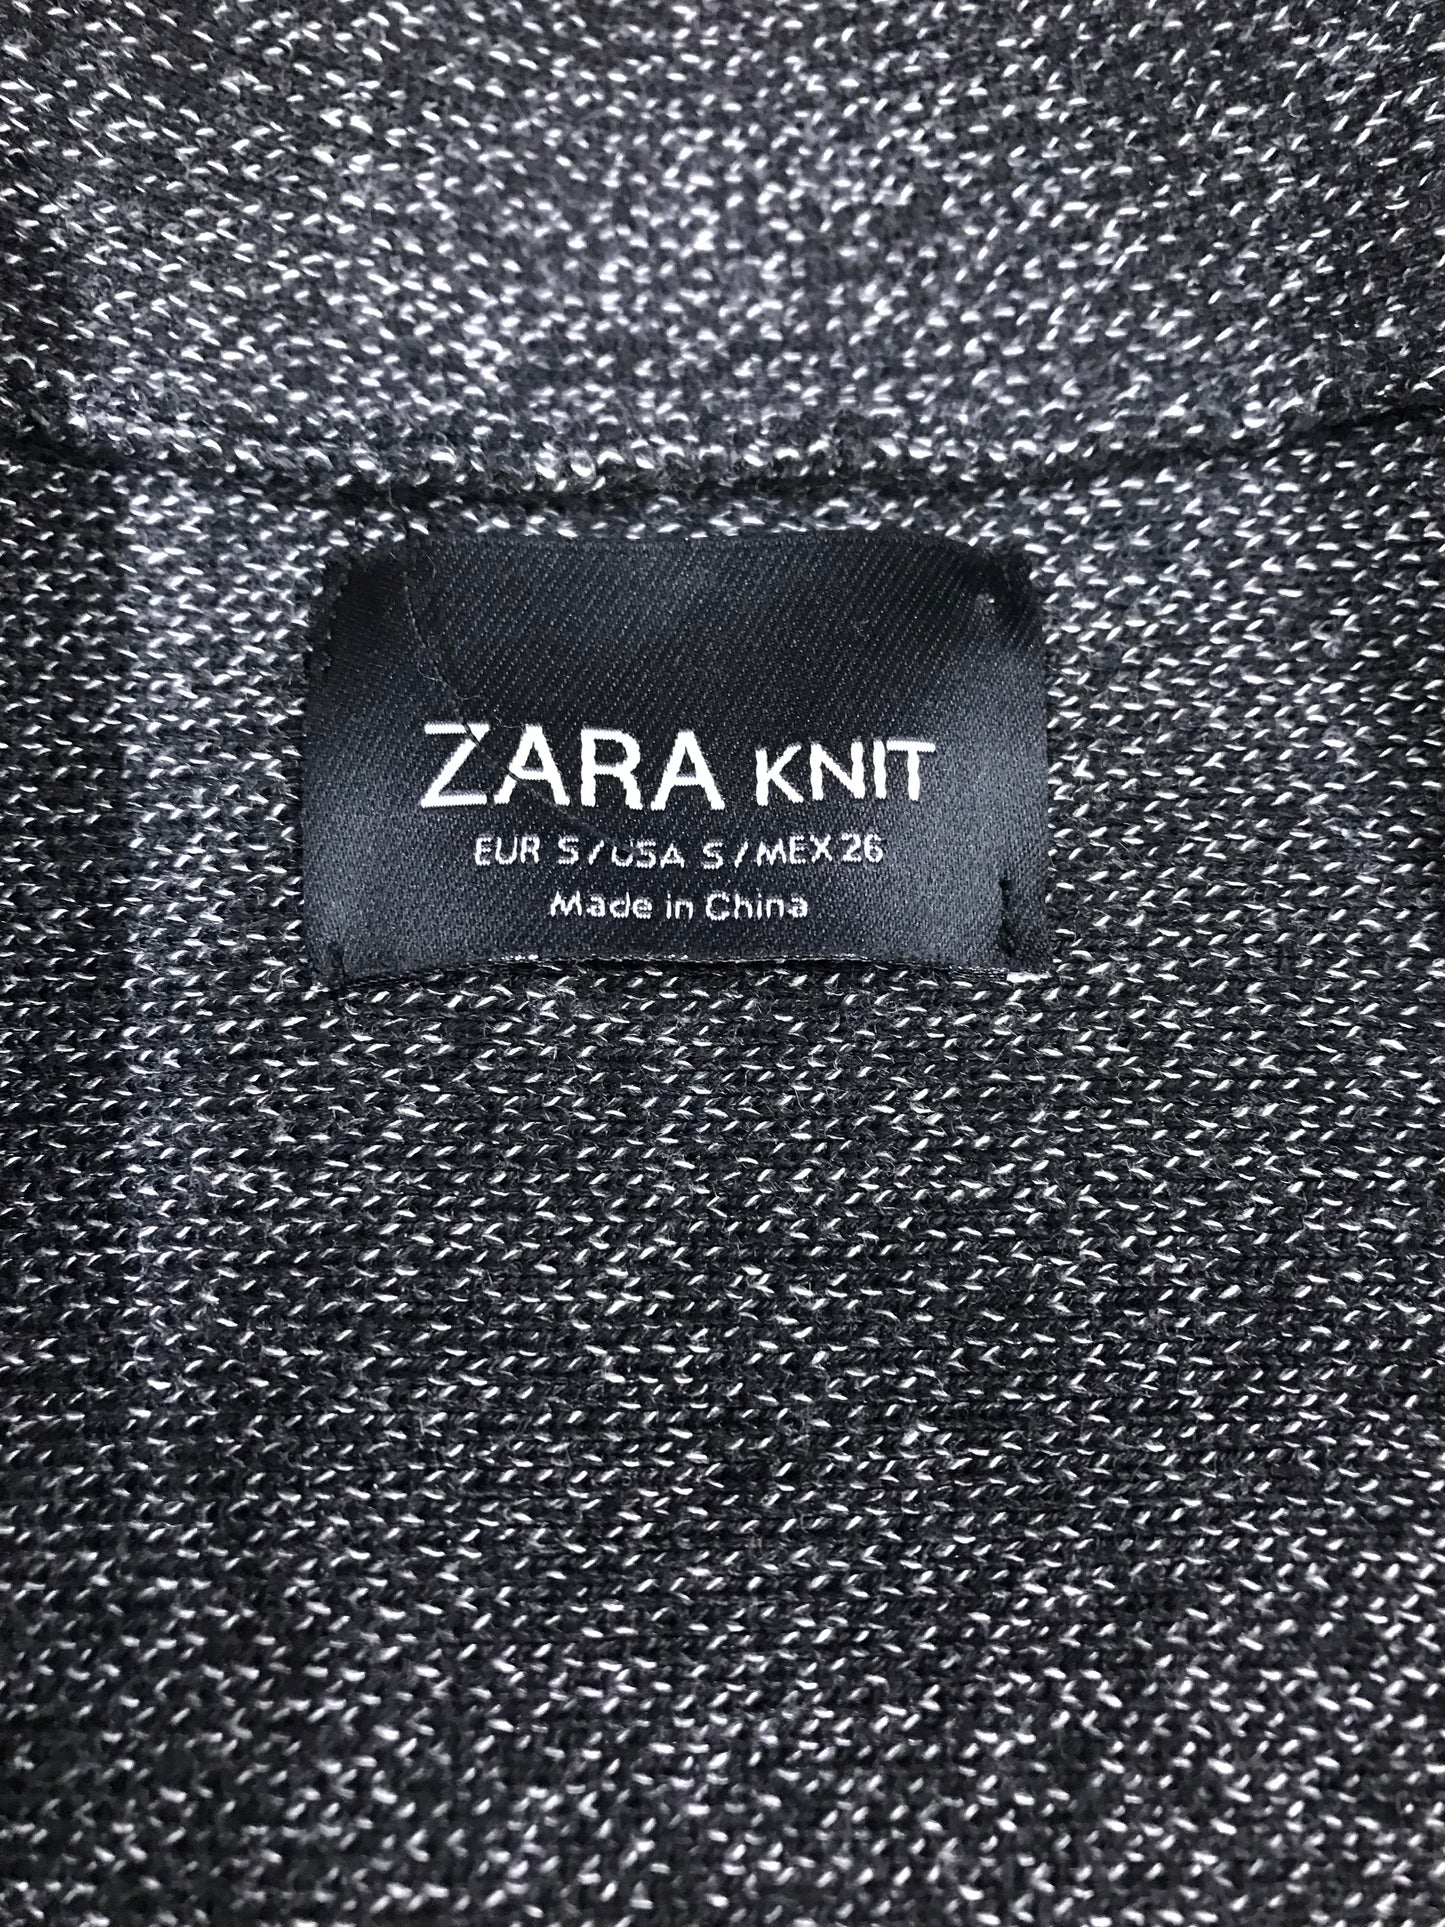 Zara Knit Tunic Grey Size Small